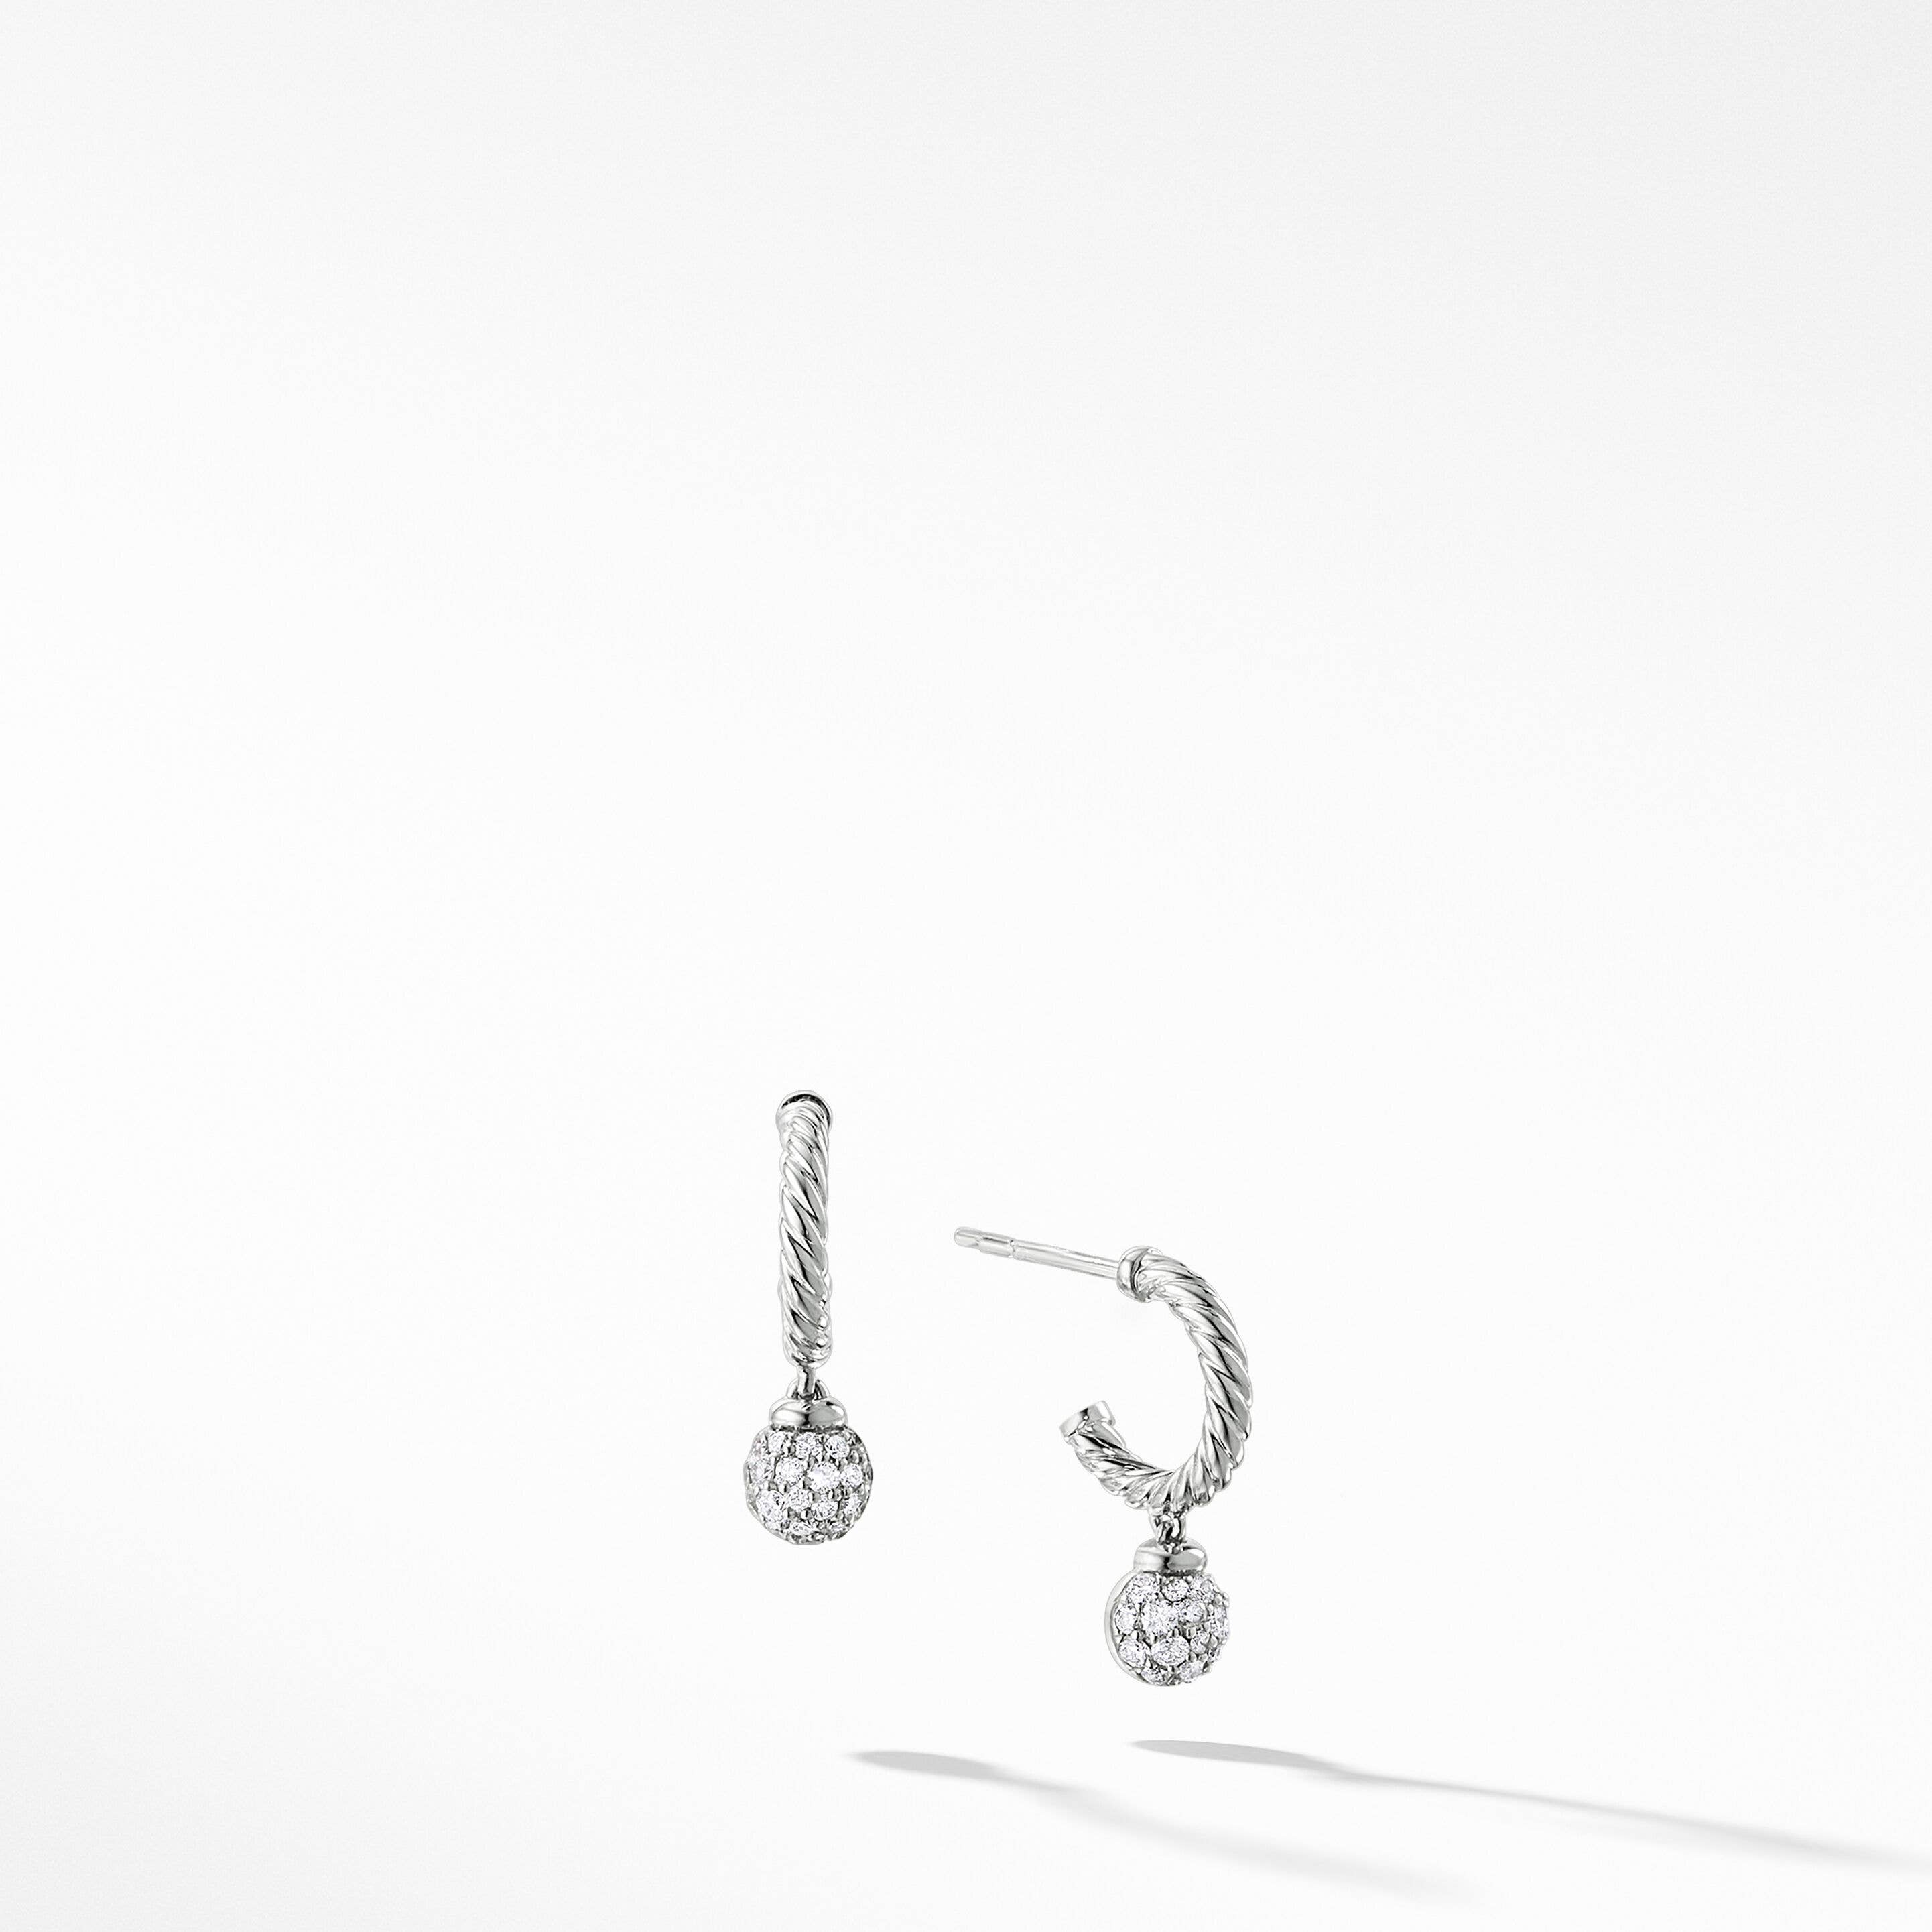 Petite Solari Hoop Drop Earrings in 18K White Gold with Pavé Diamonds